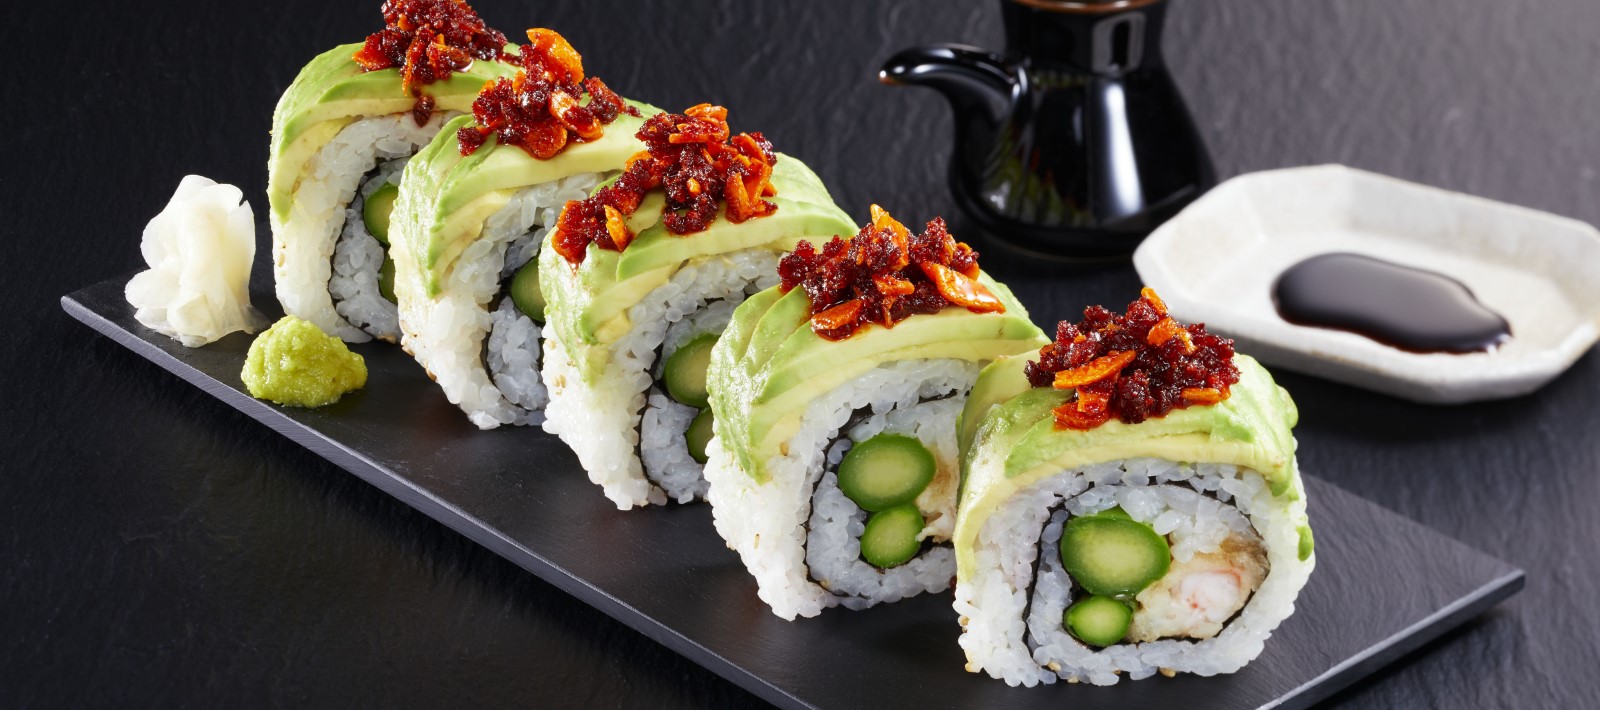 Avocado Sushi Rolls with UMAMI TOPPING (Dragon Rolls with UMAMI